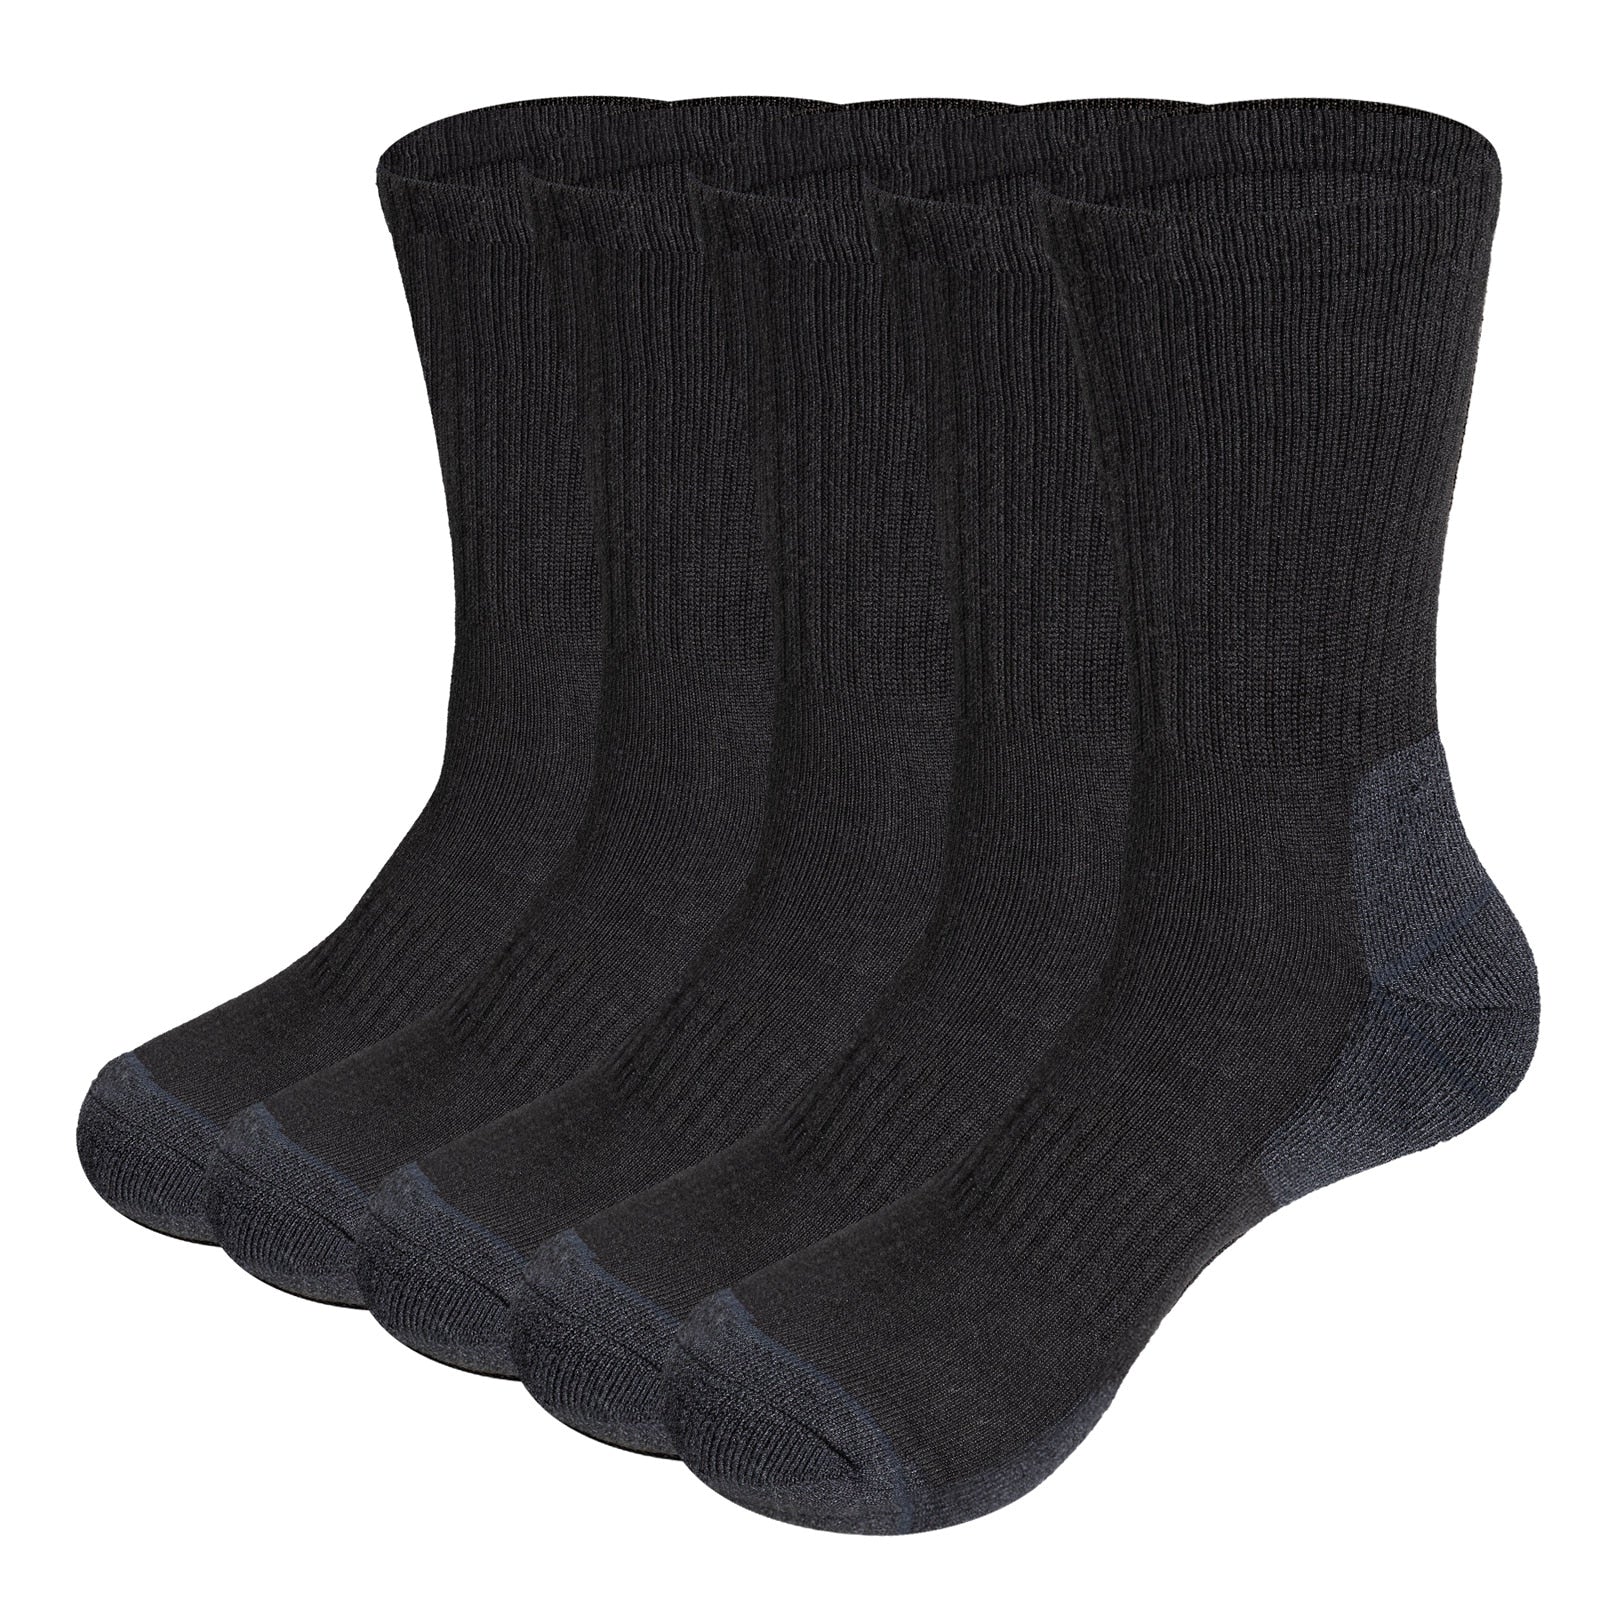 Mens Moisture Wicking Mid Calf Thermal Work Boot Sports Hiking Trekking Socks( 5 Pairs/Pack)